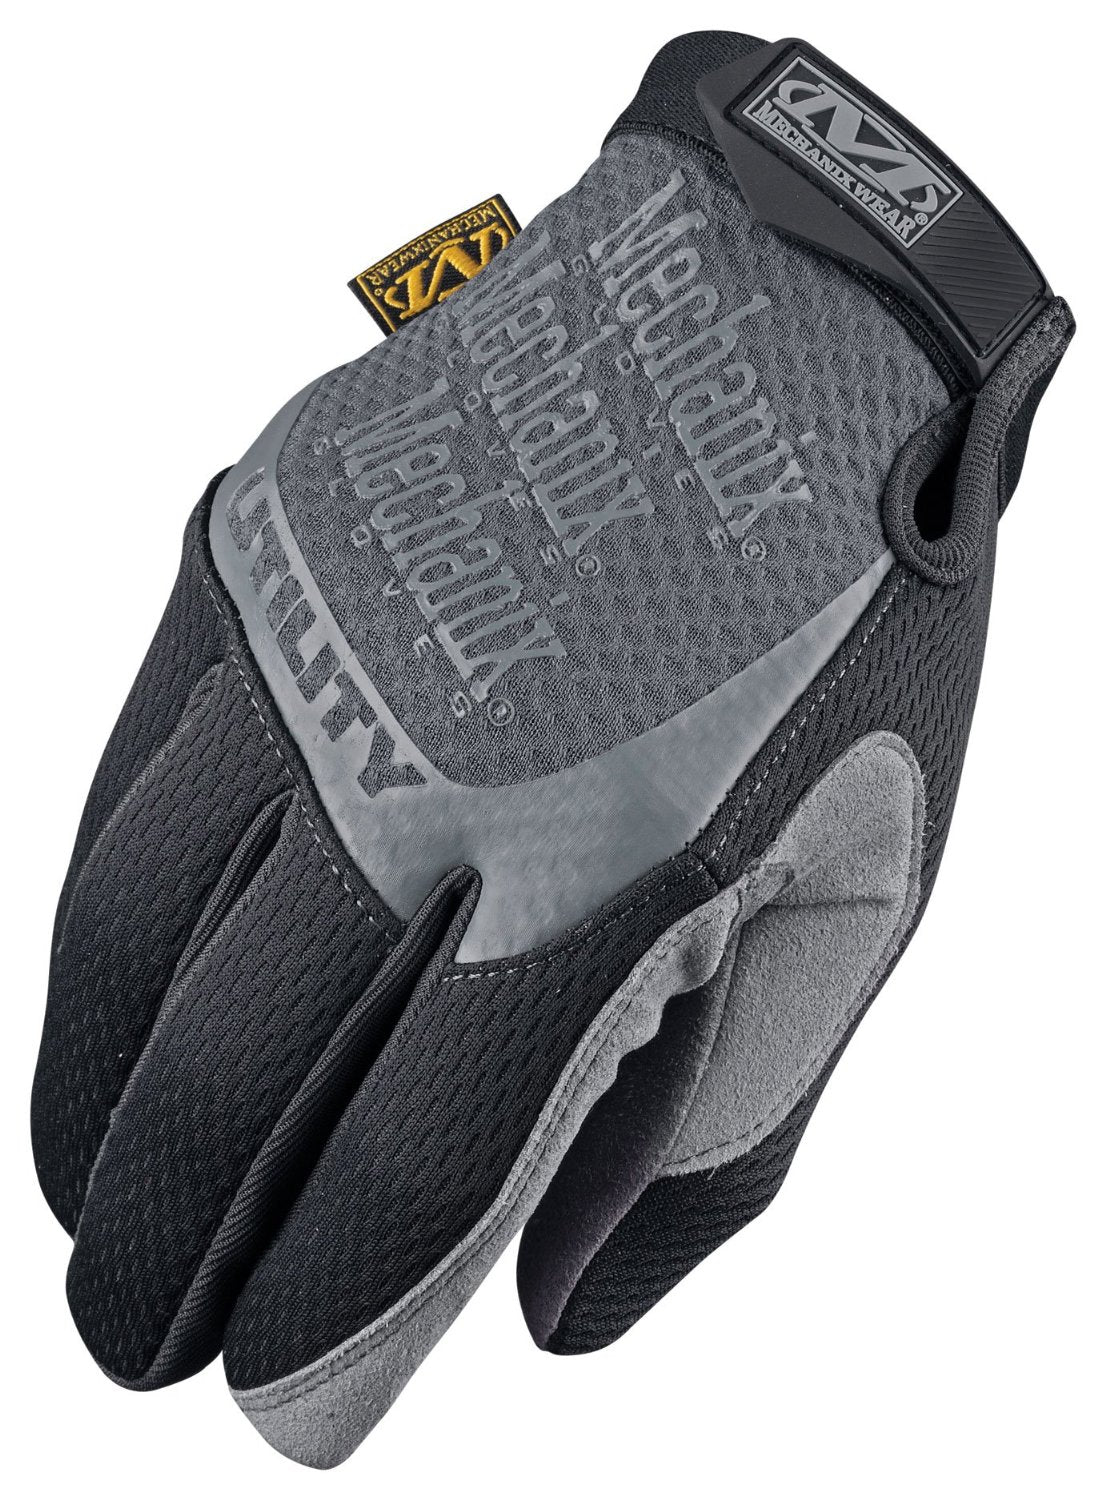 Mechanix Wear H15-05-012 All Purpose Utility Glove, Black, XX-Large